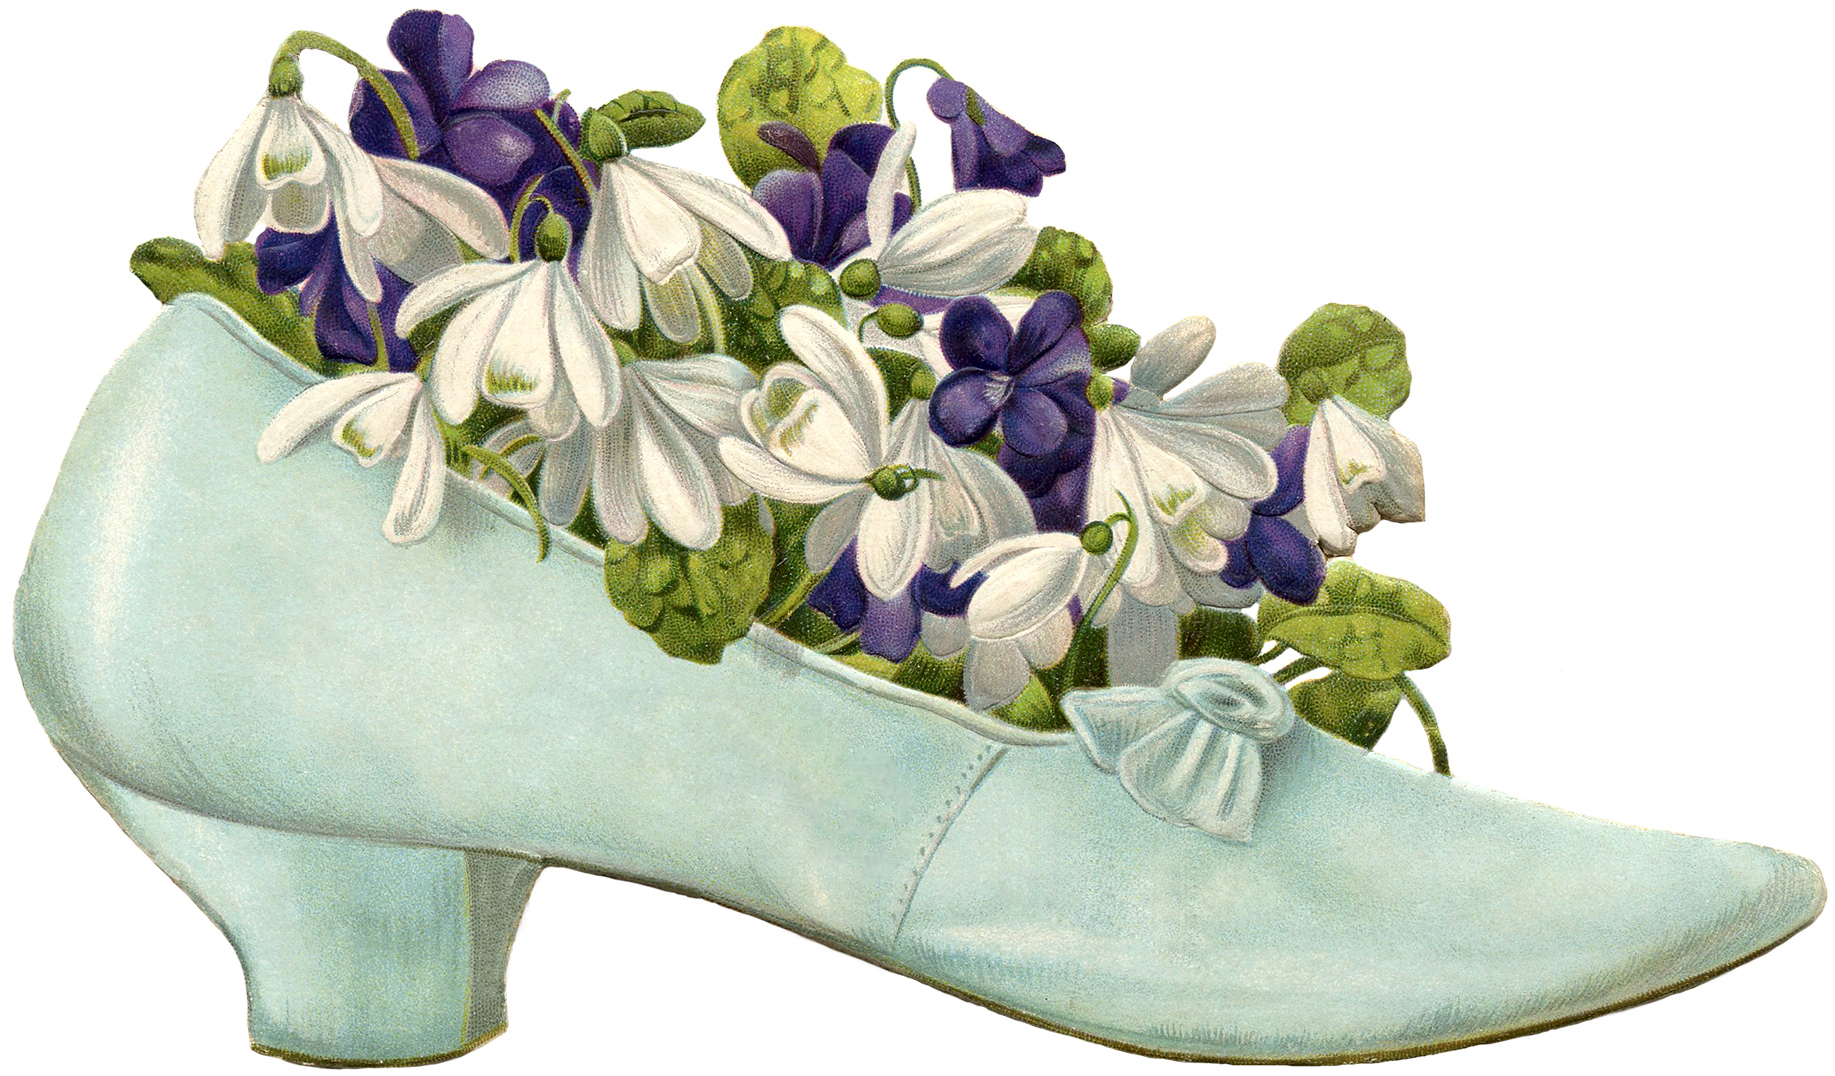 8 Vintage Flower Shoe Images! - The 